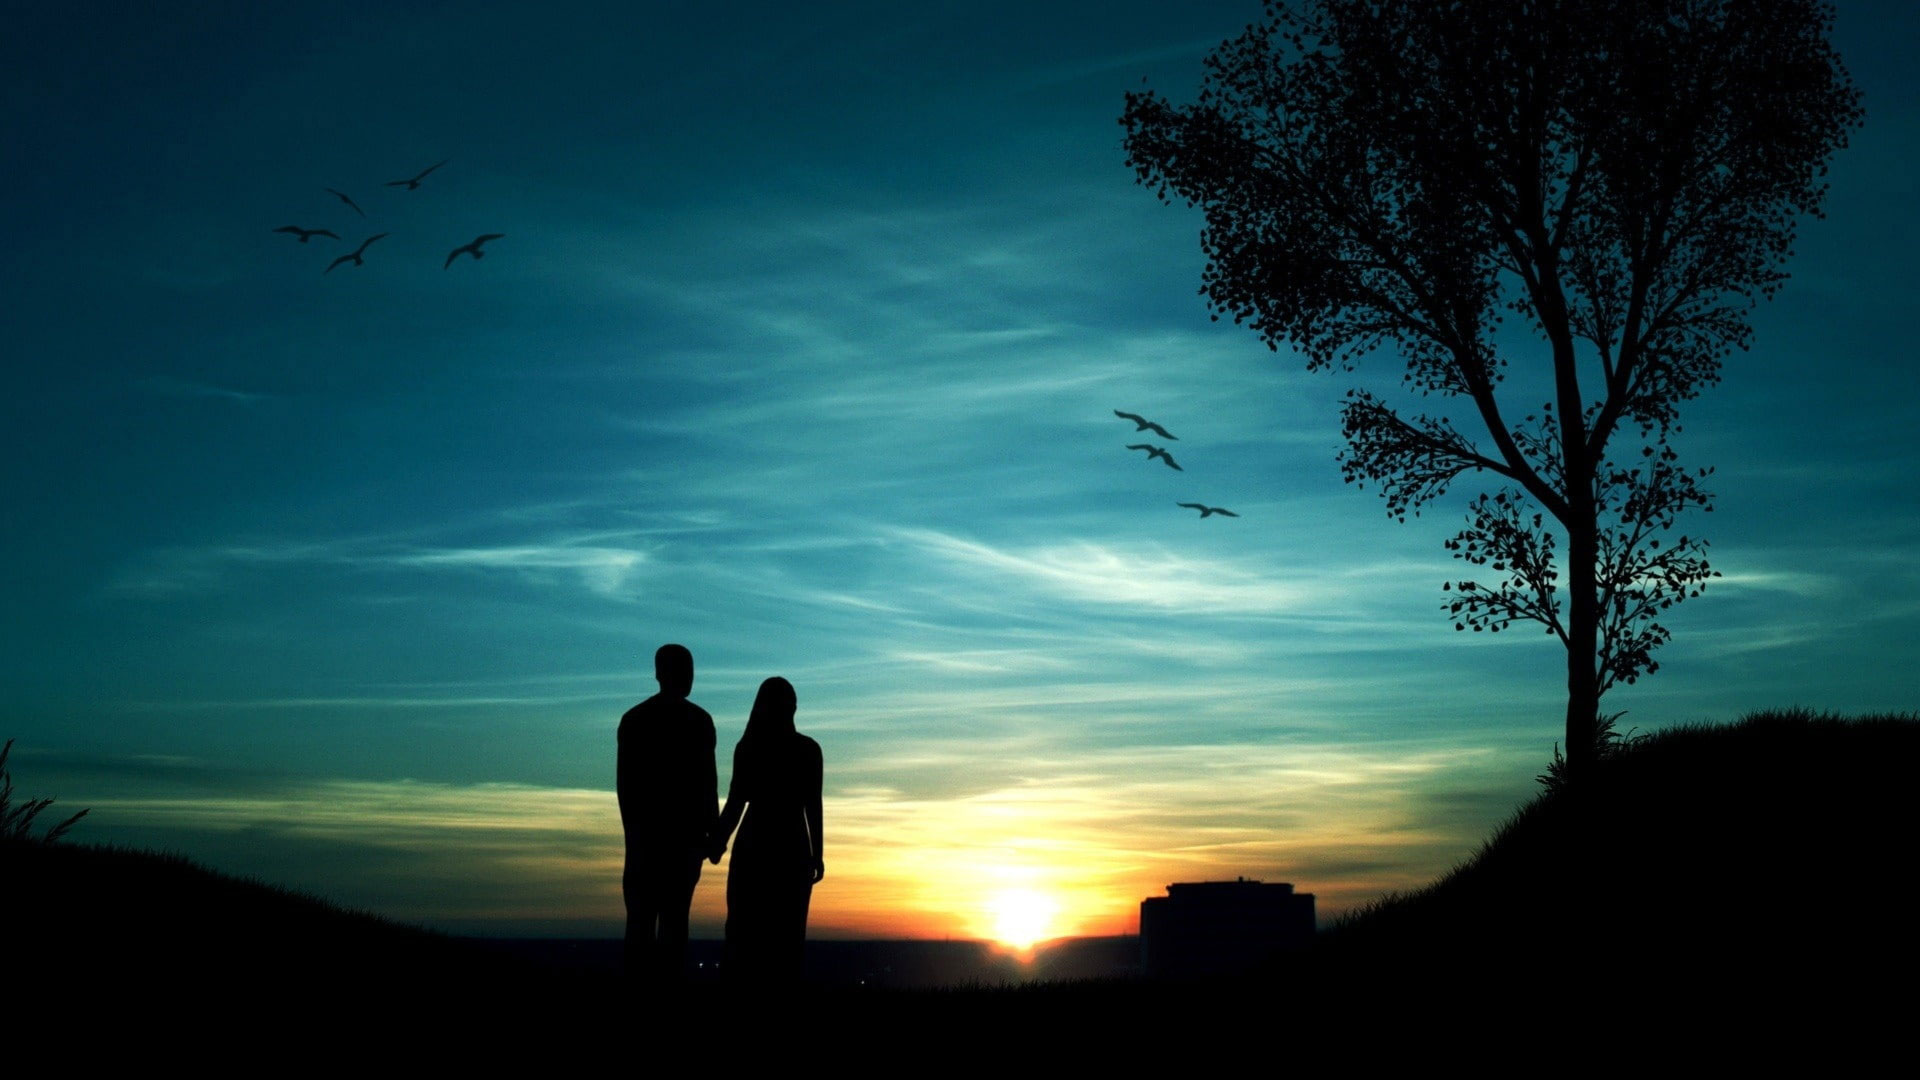 Romantic evening wallpaper, couples, trees, birds, sunset, silhouette